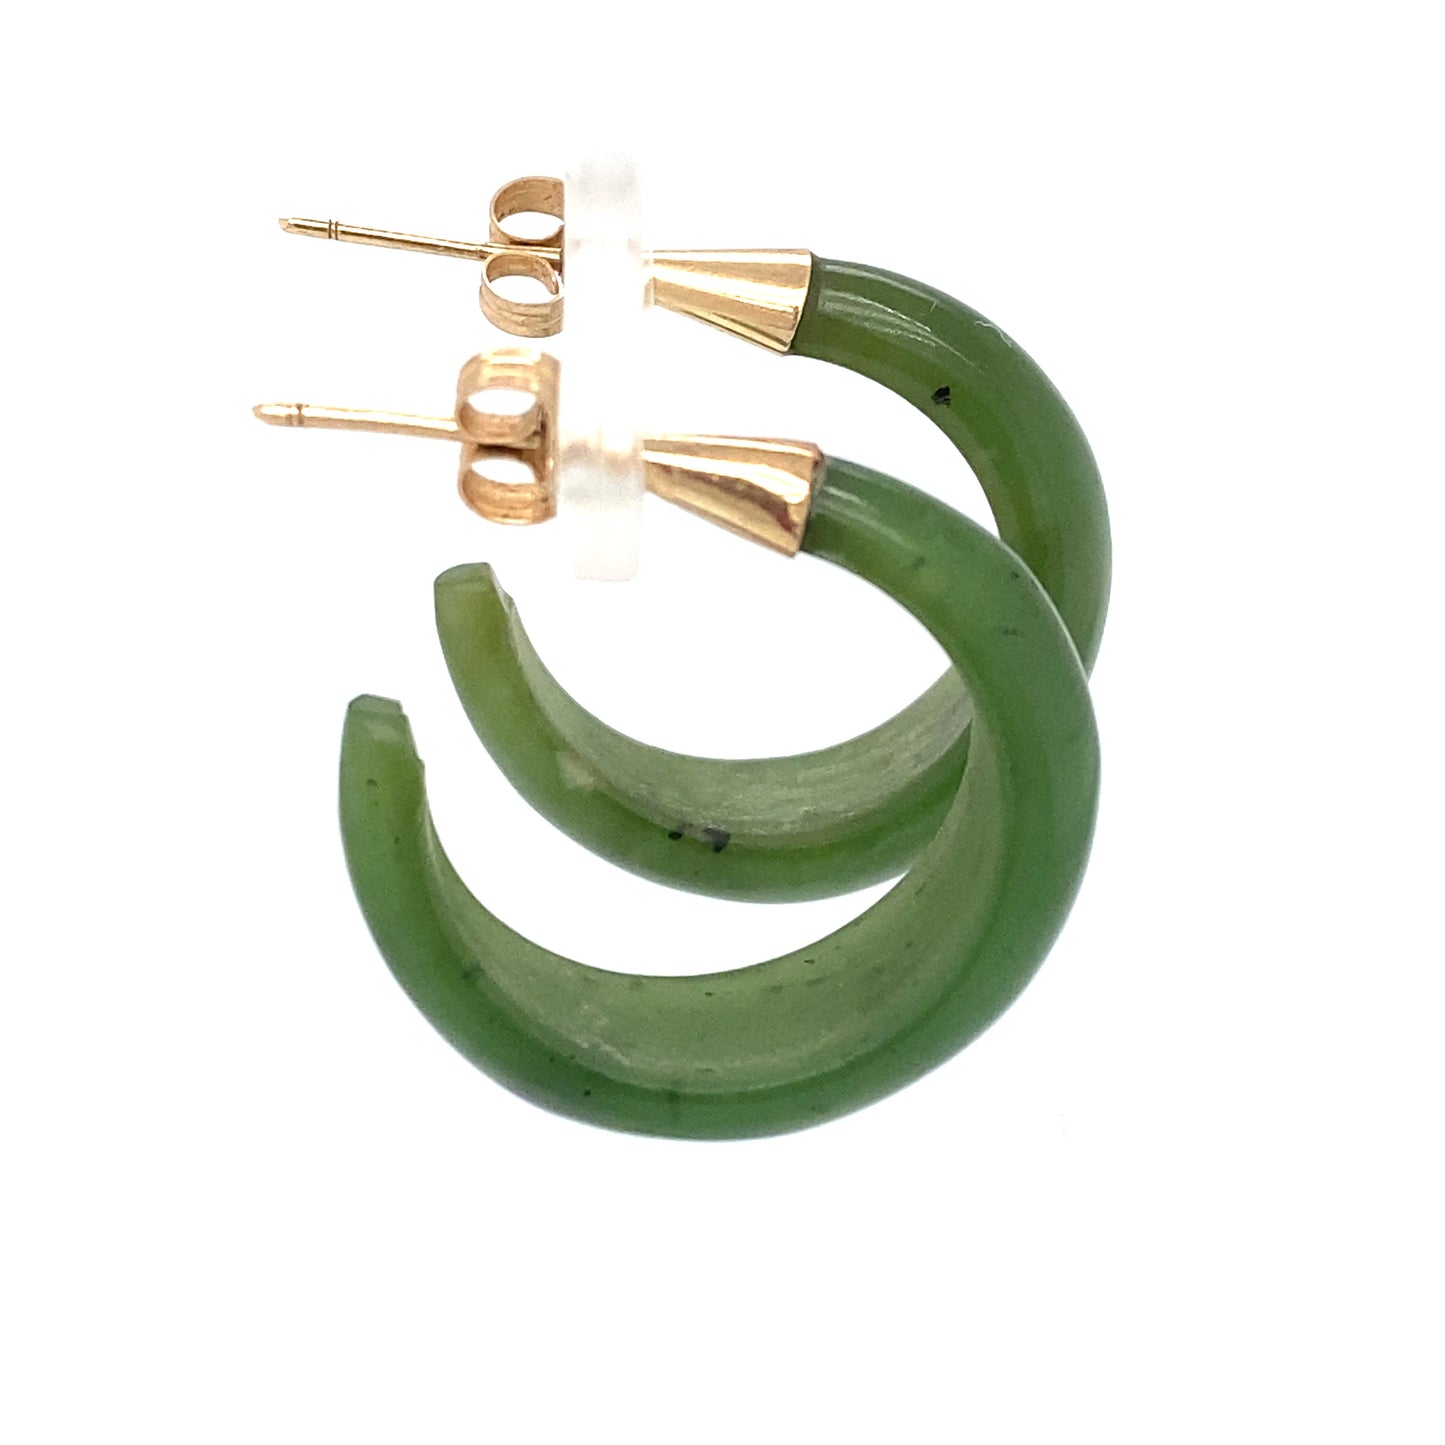 Circa 1980s Curved Green Jade Open Hoop Earrings in 14K Gold